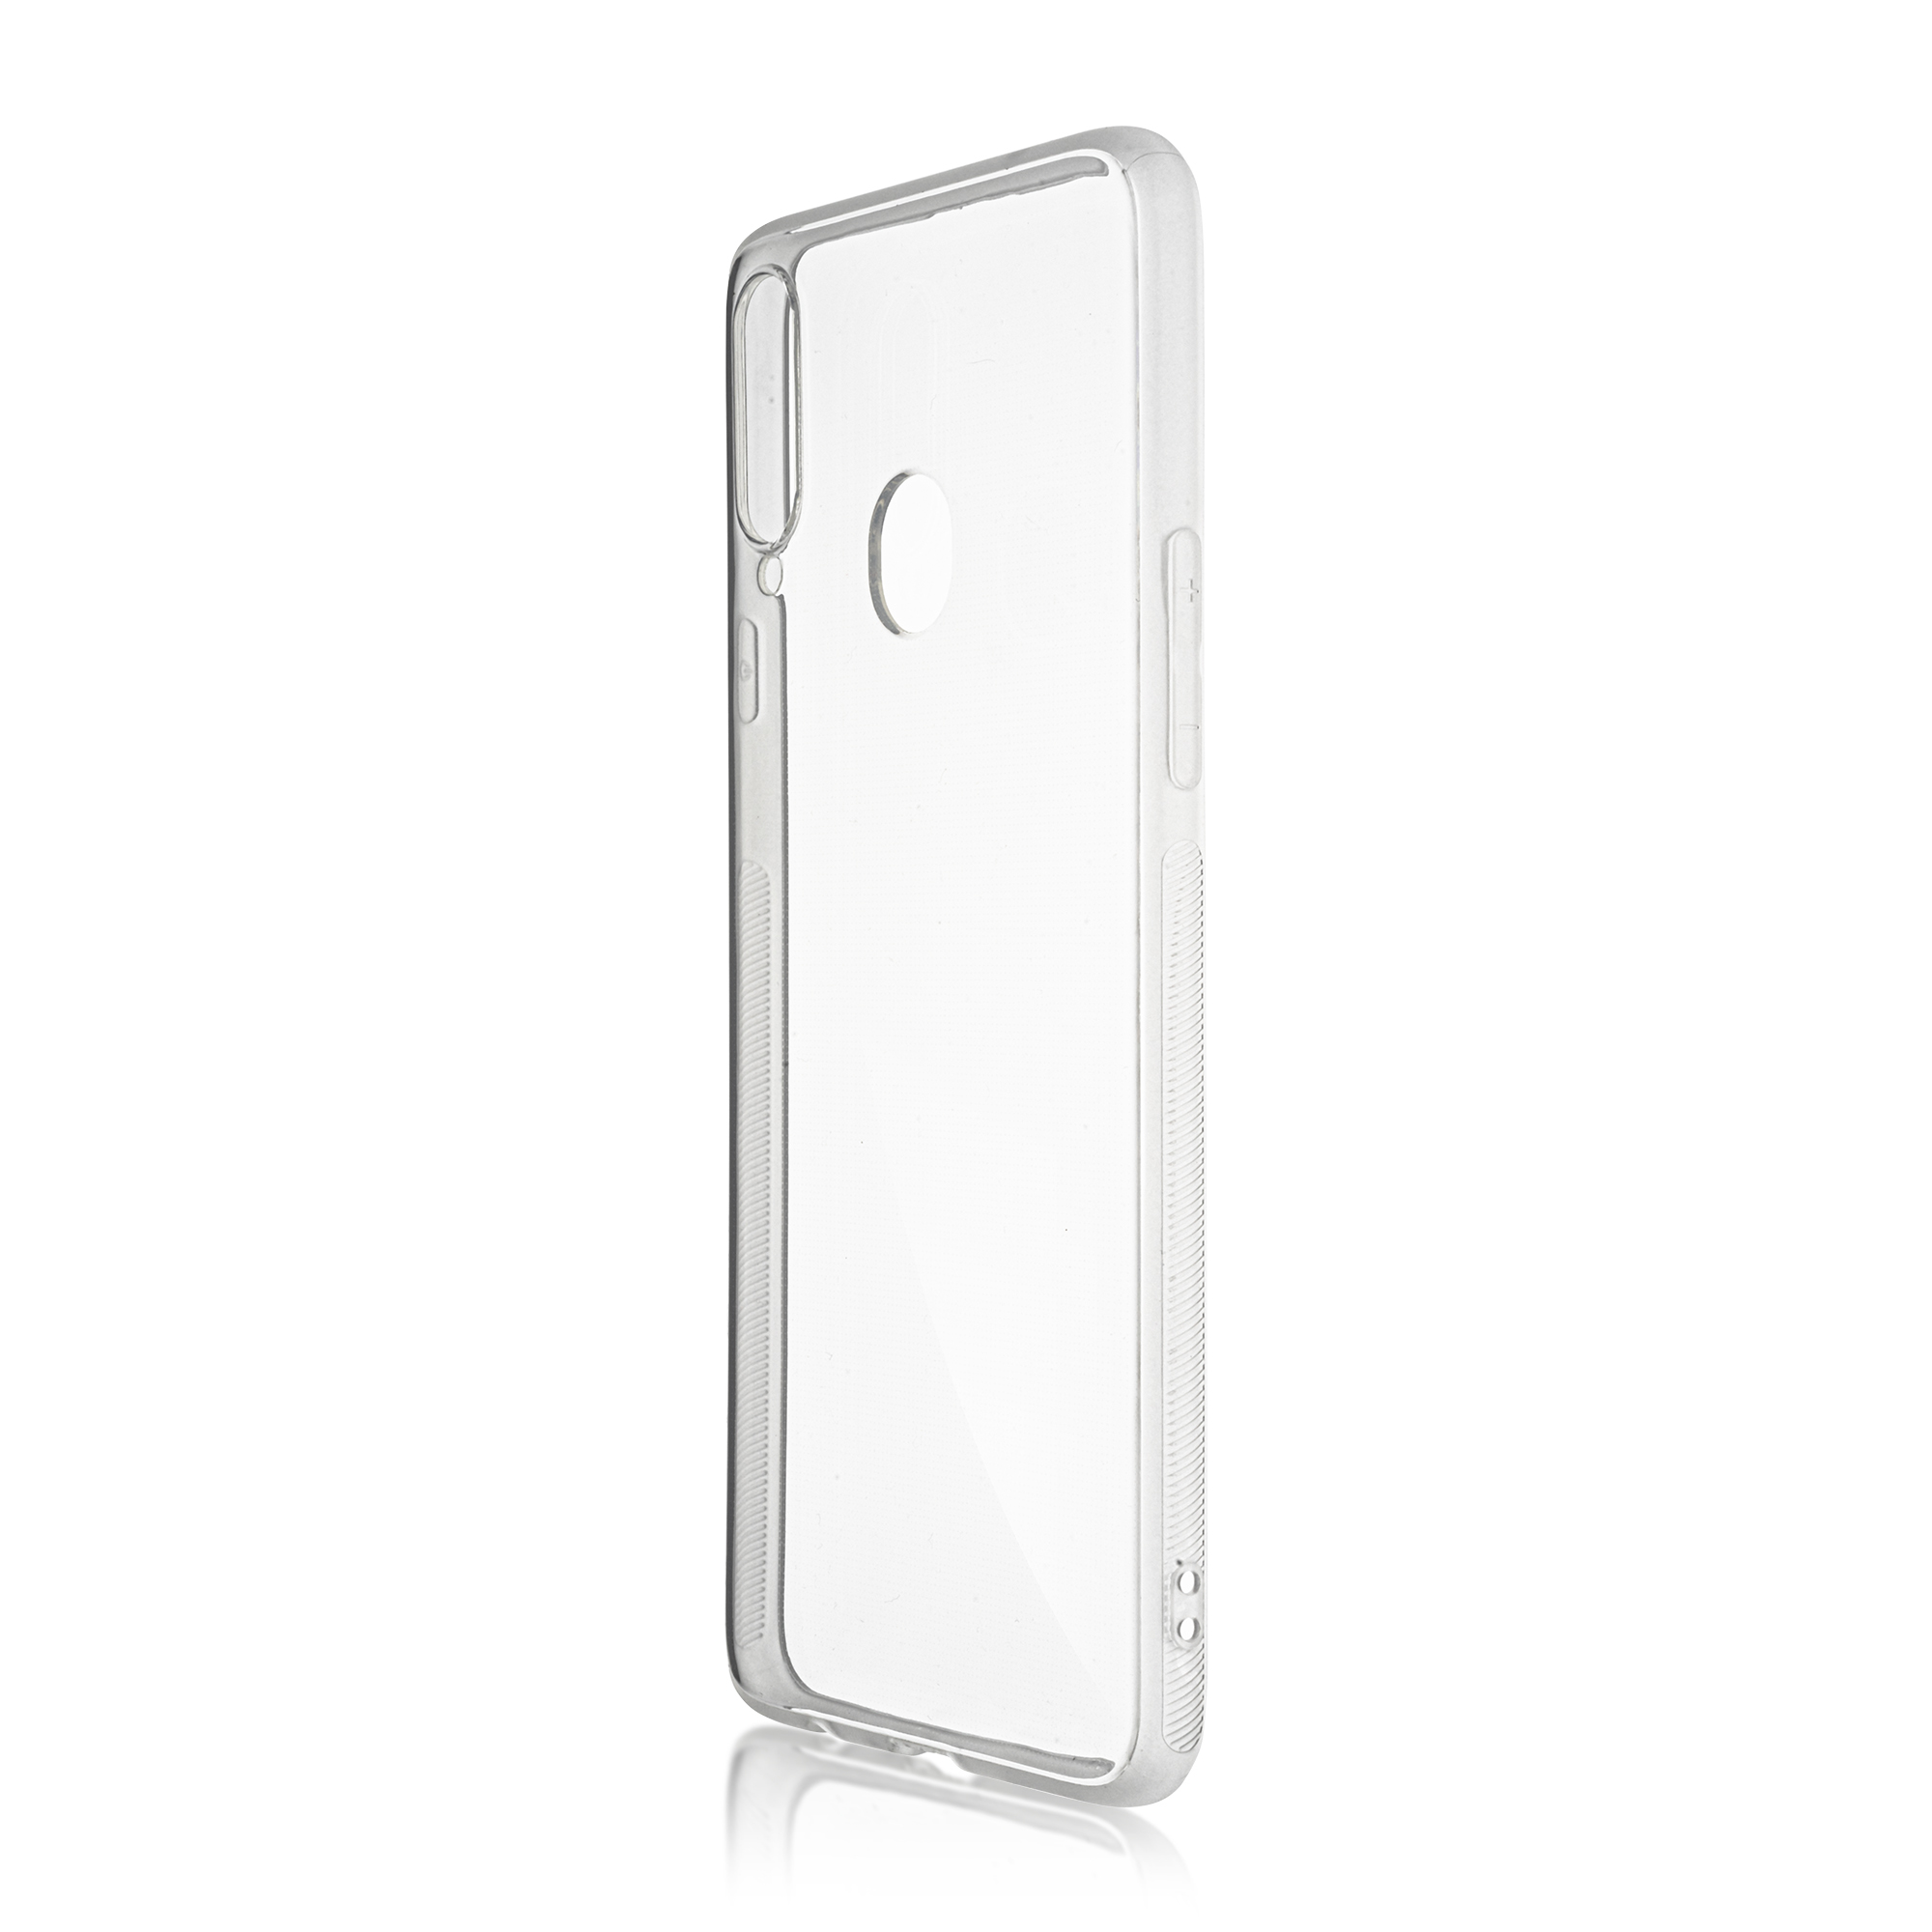 Чехол-накладка BROSCO NEWTPU для смартфона Samsung Galaxy A20s, силикон, прозрачный (SS-A20S-NEWTPU-TRANSPARENT)